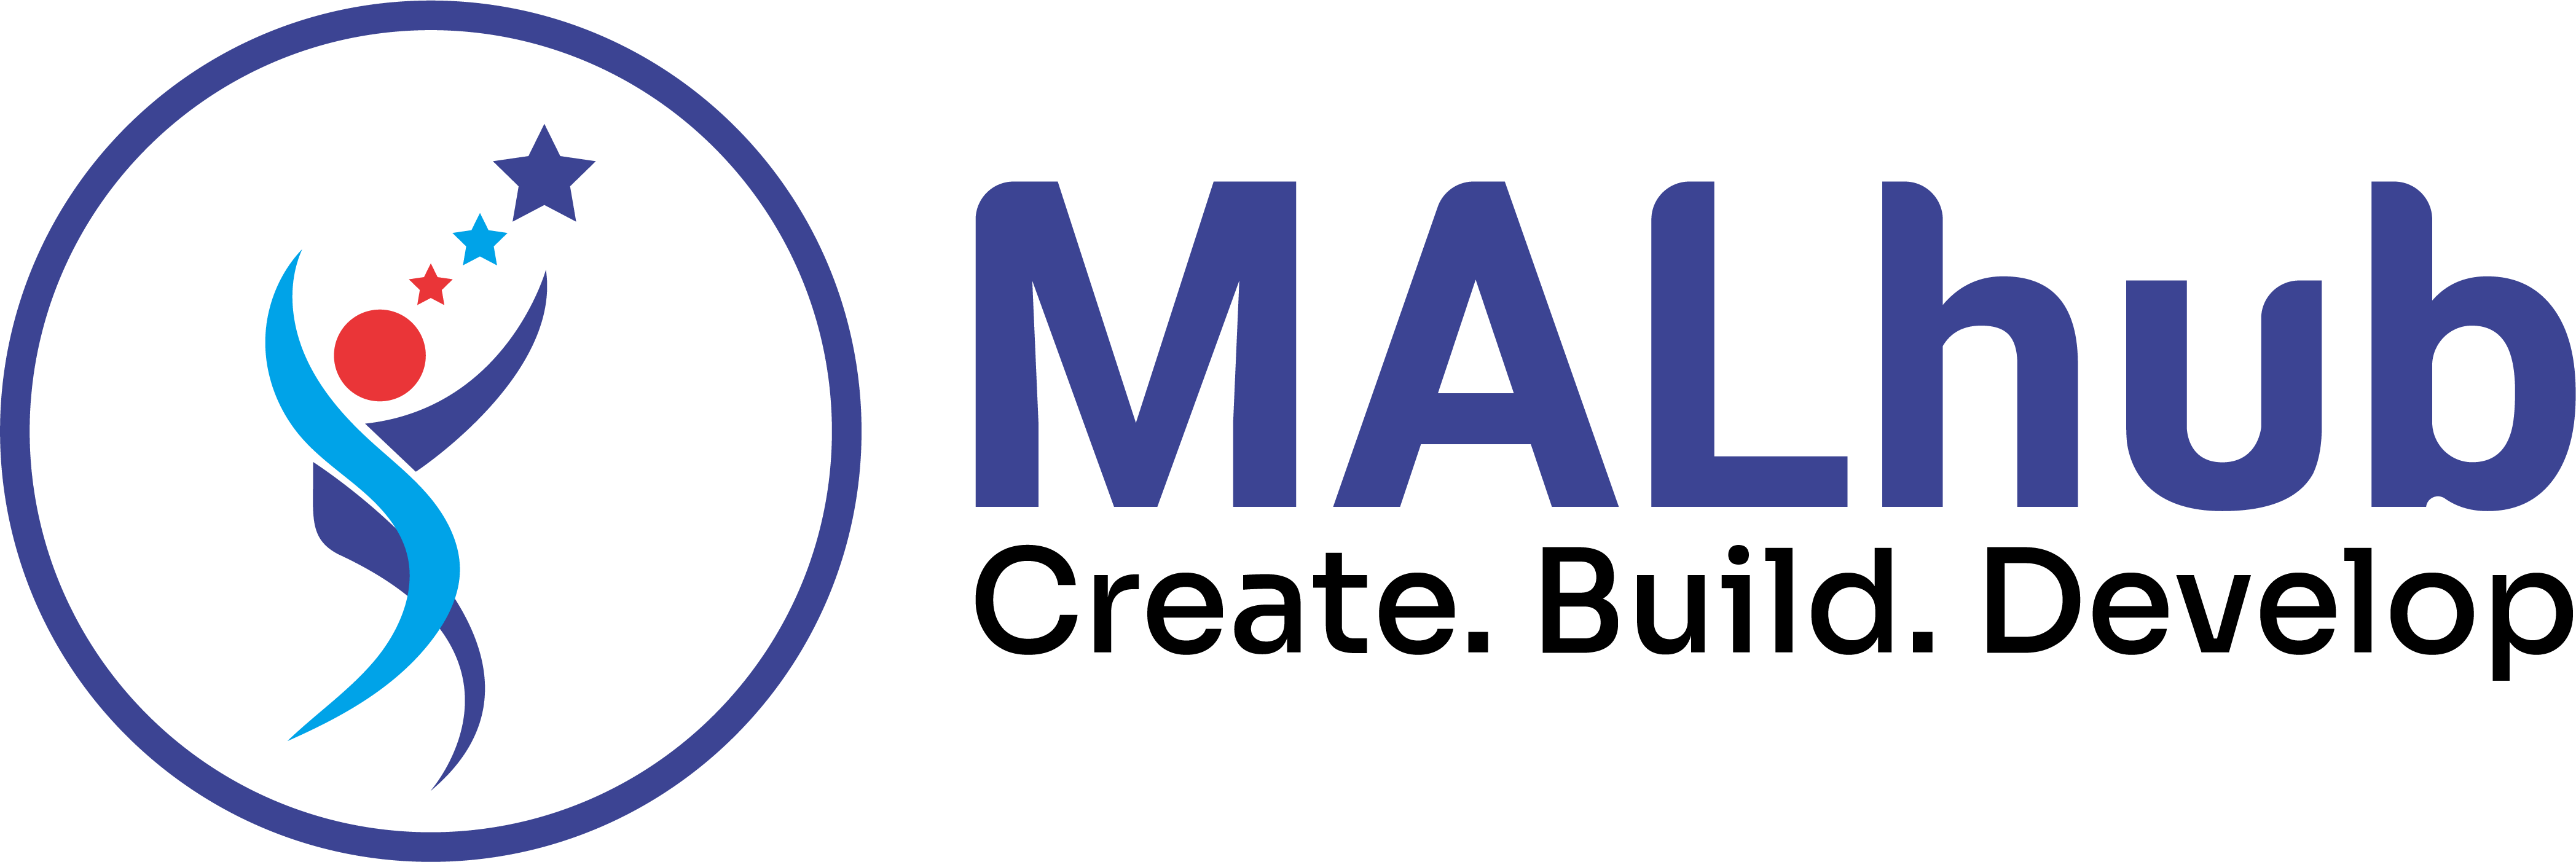 malhub logo